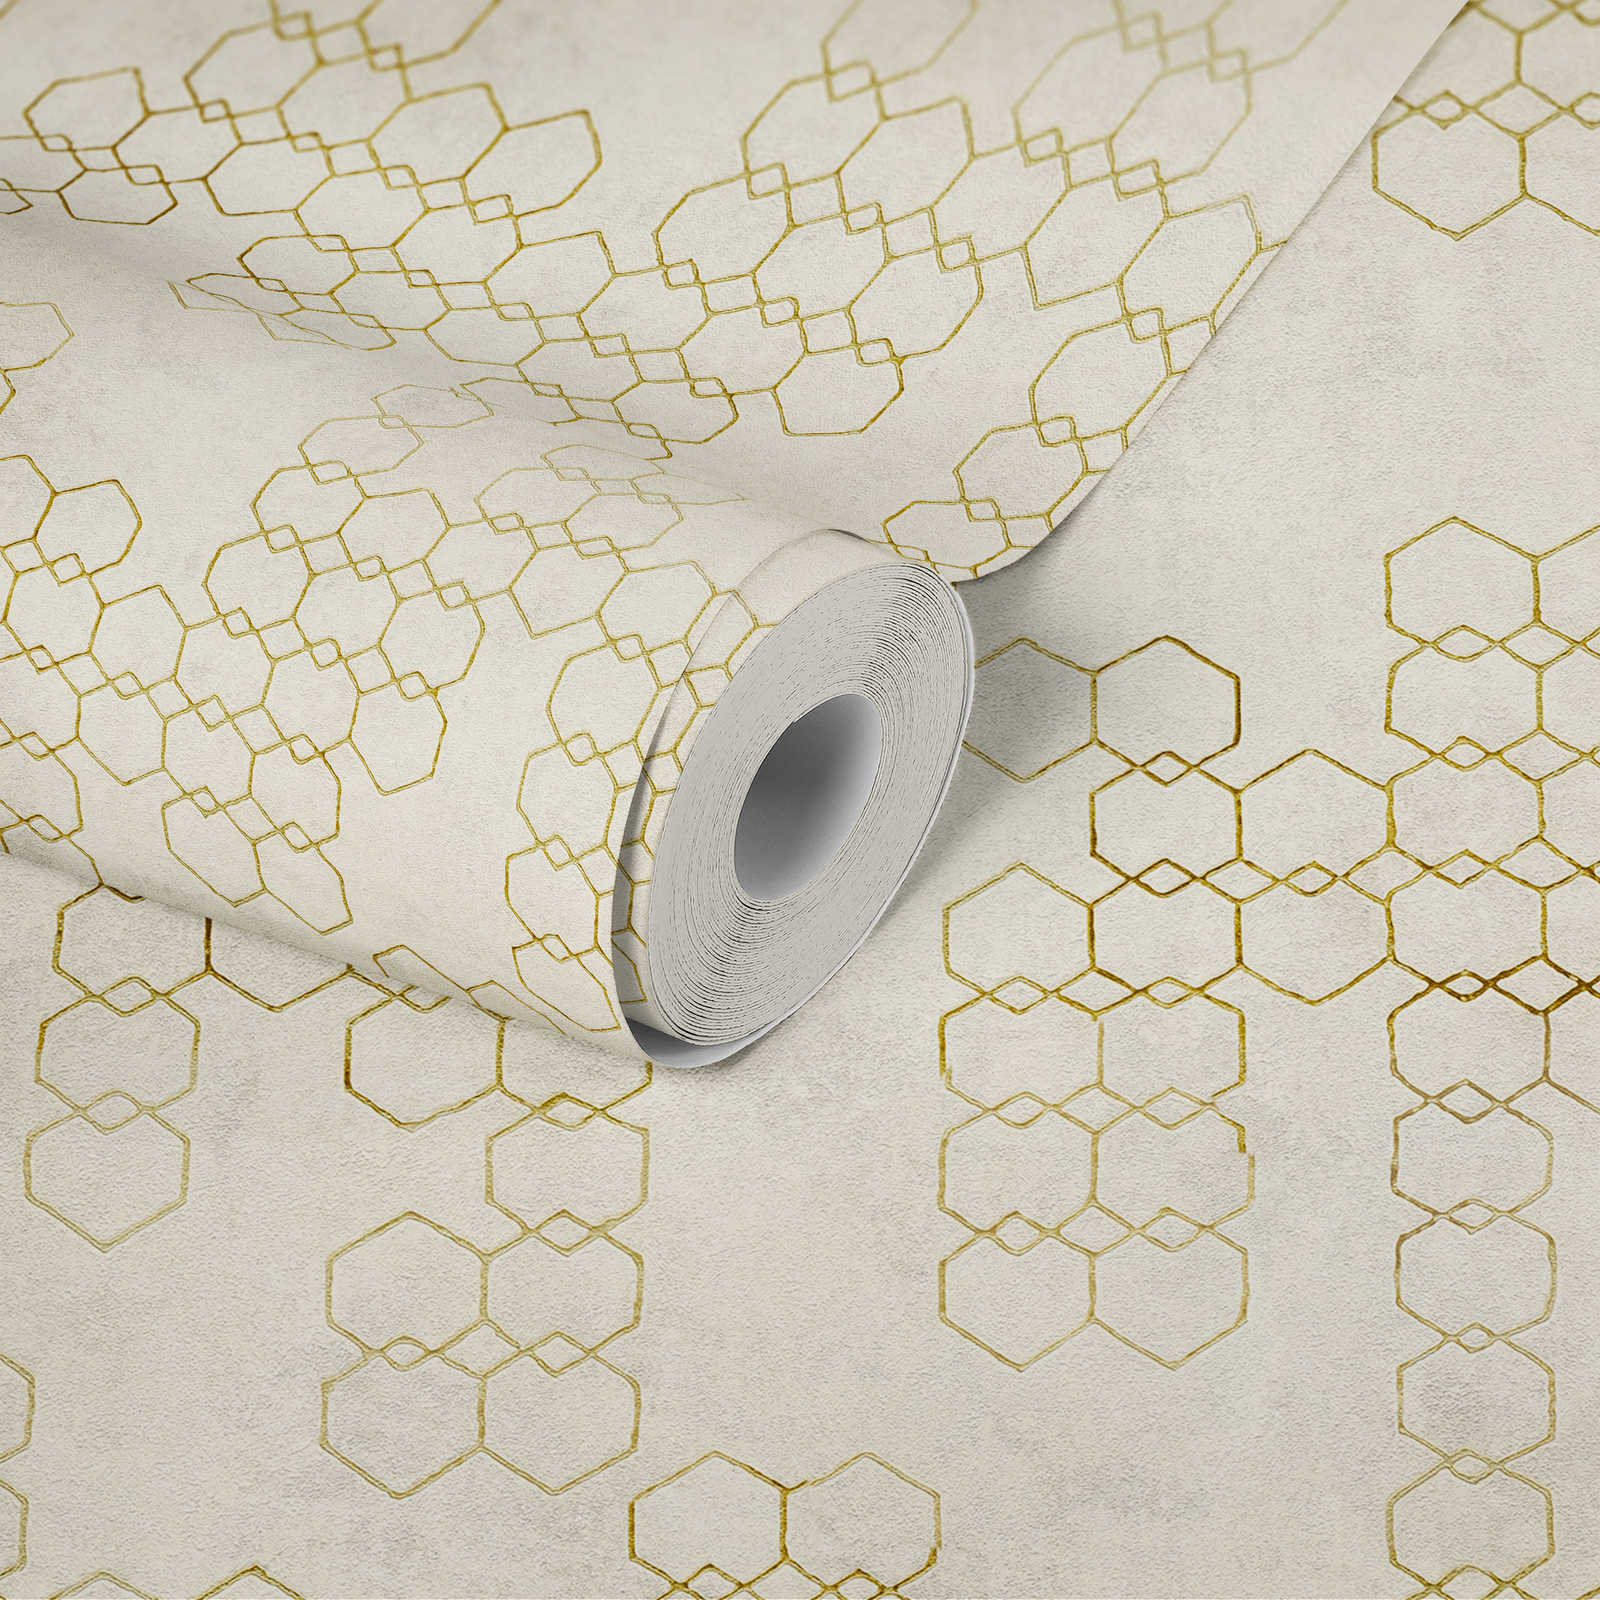             Geometric pattern wallpaper in industrial style - cream, gold, grey
        